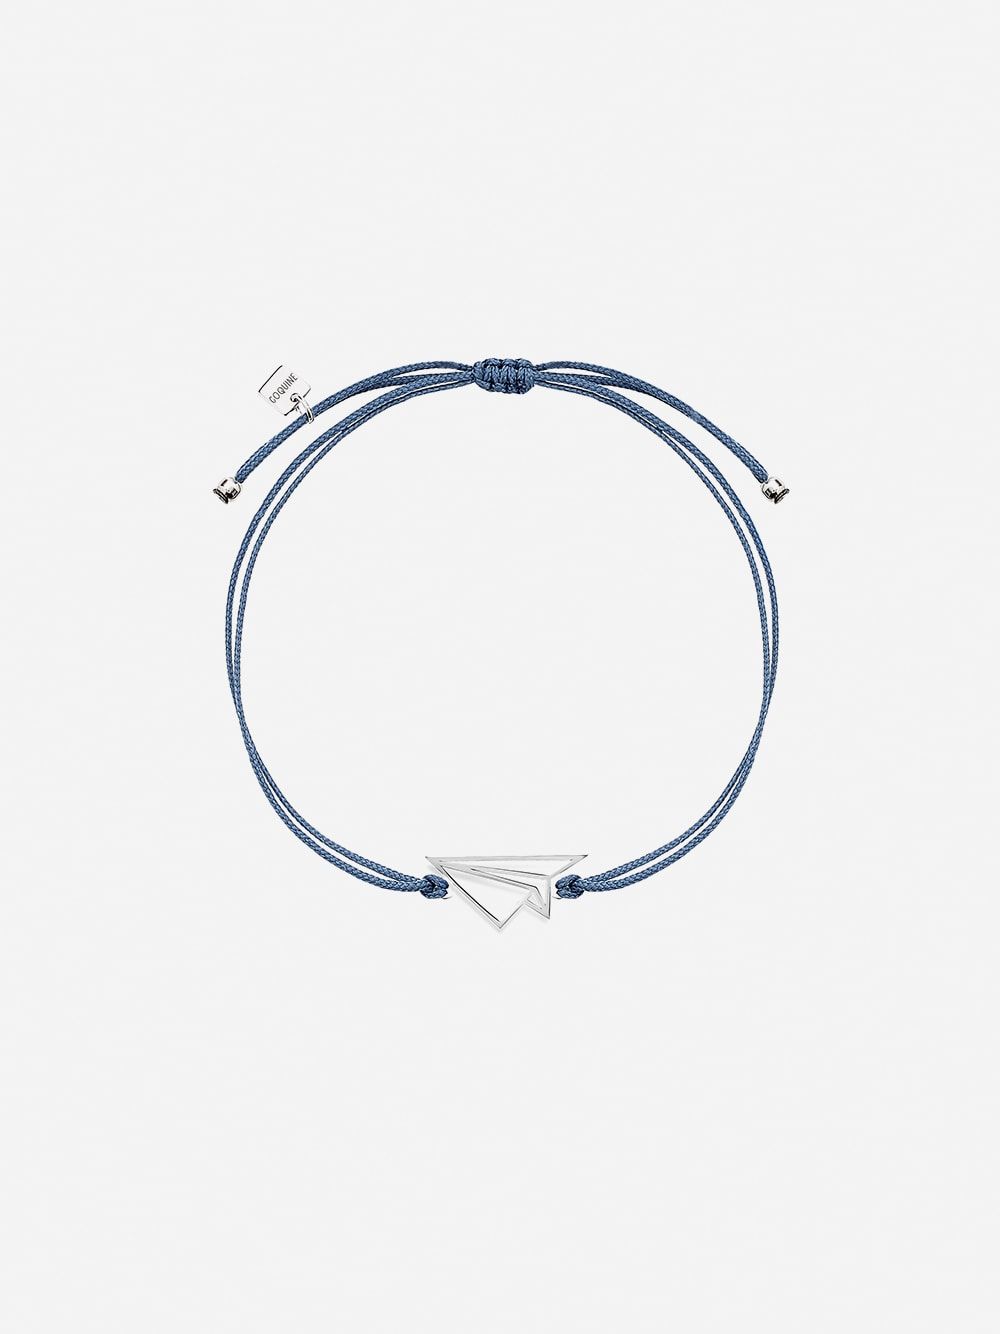 Silver Bracelet Origami Airplane | Coquine Jewelry